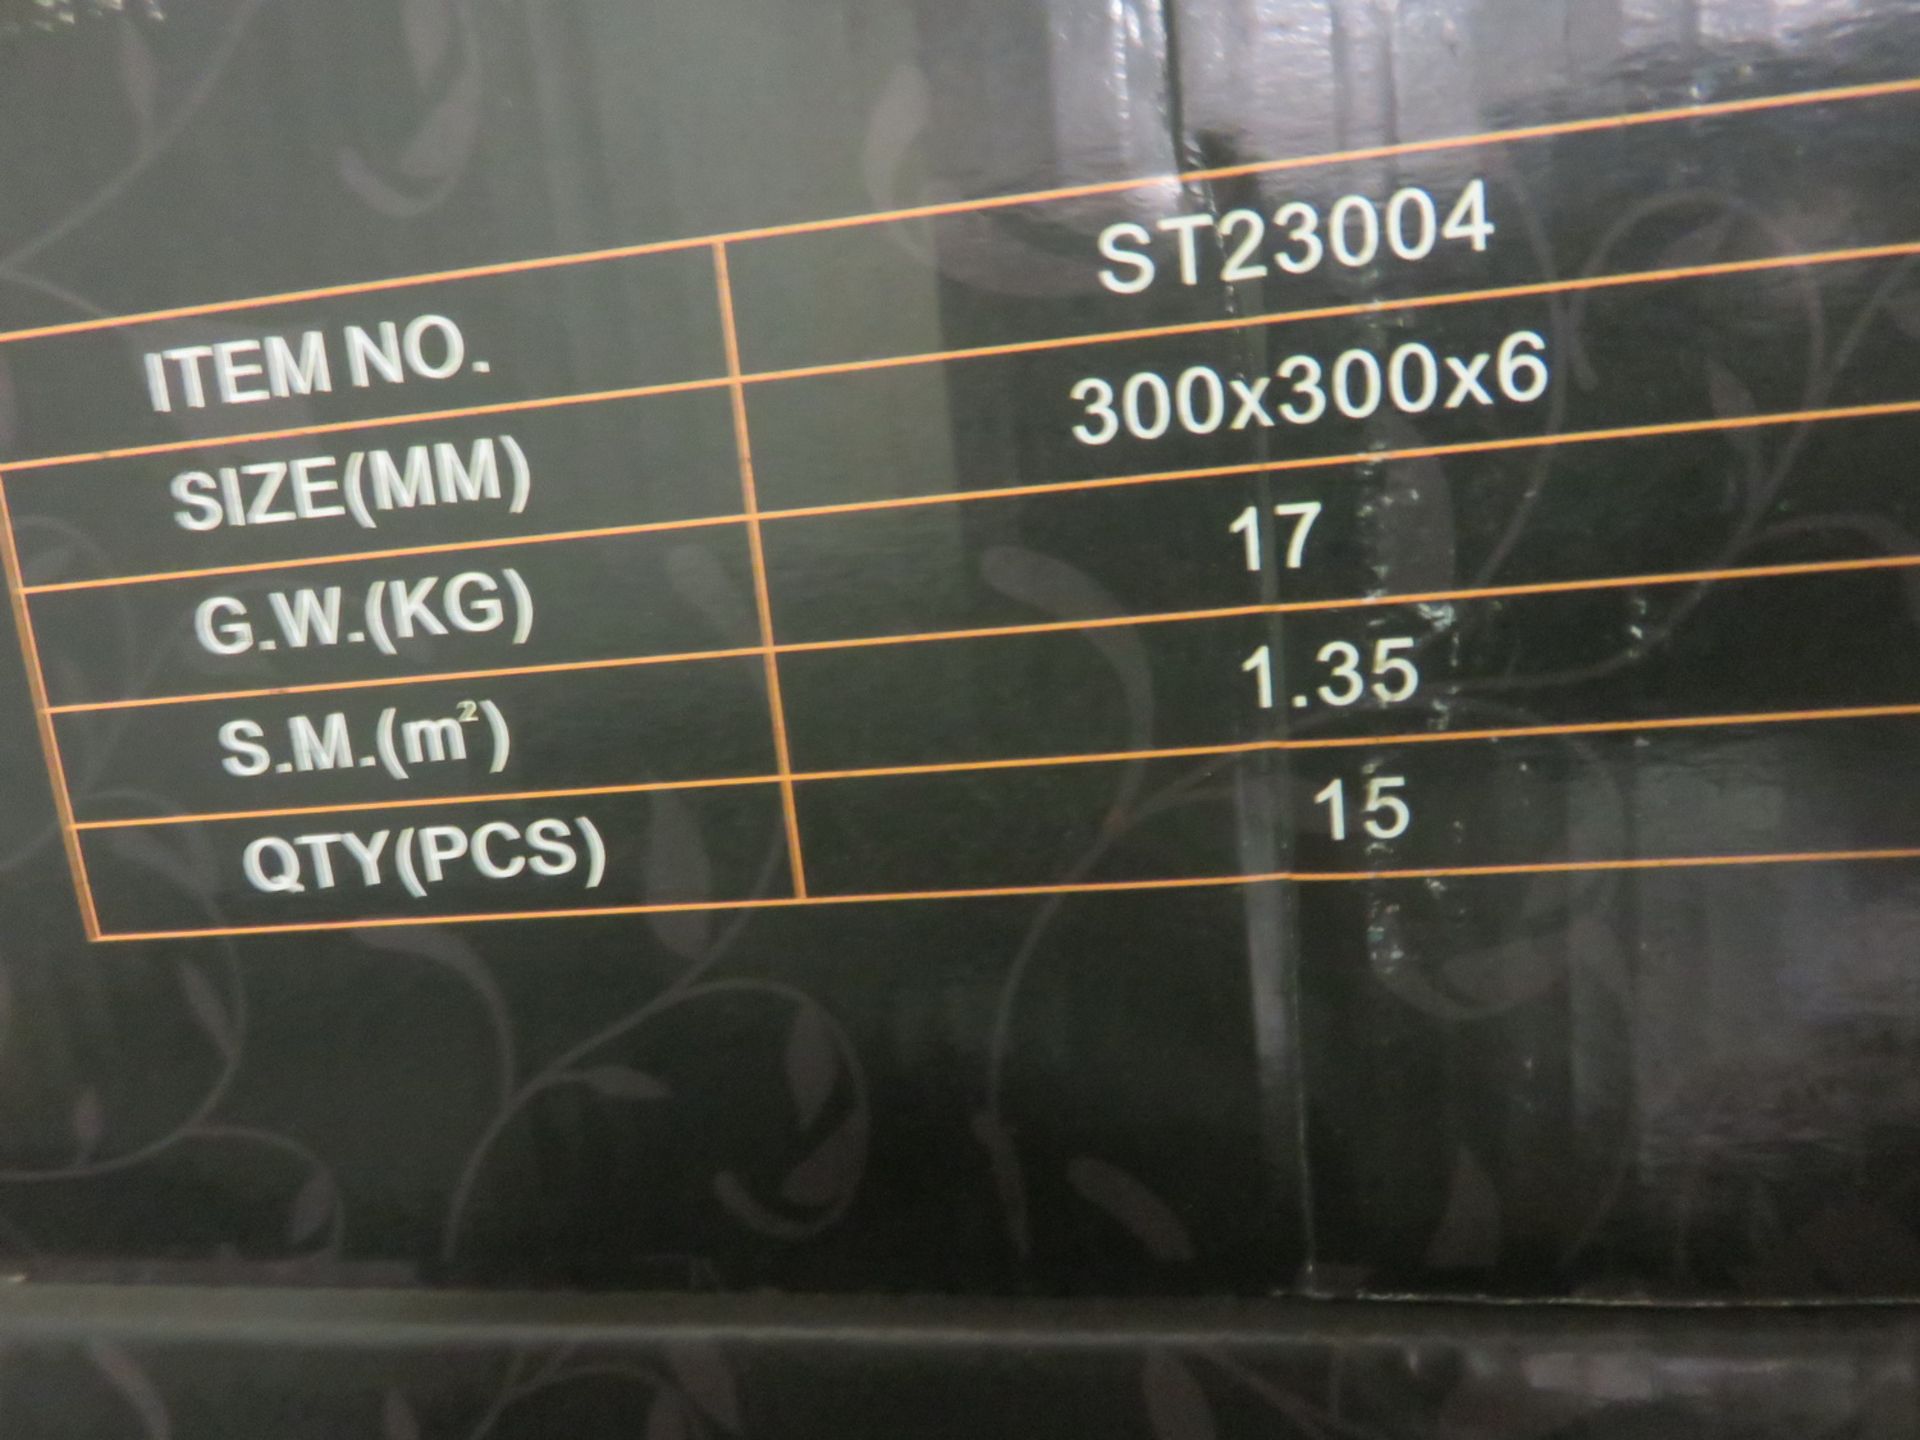 BOXES - CROWN ST23004 300 X 300 X 6MM MOSAIC TILES (15 PCS/BOX) - Image 2 of 3